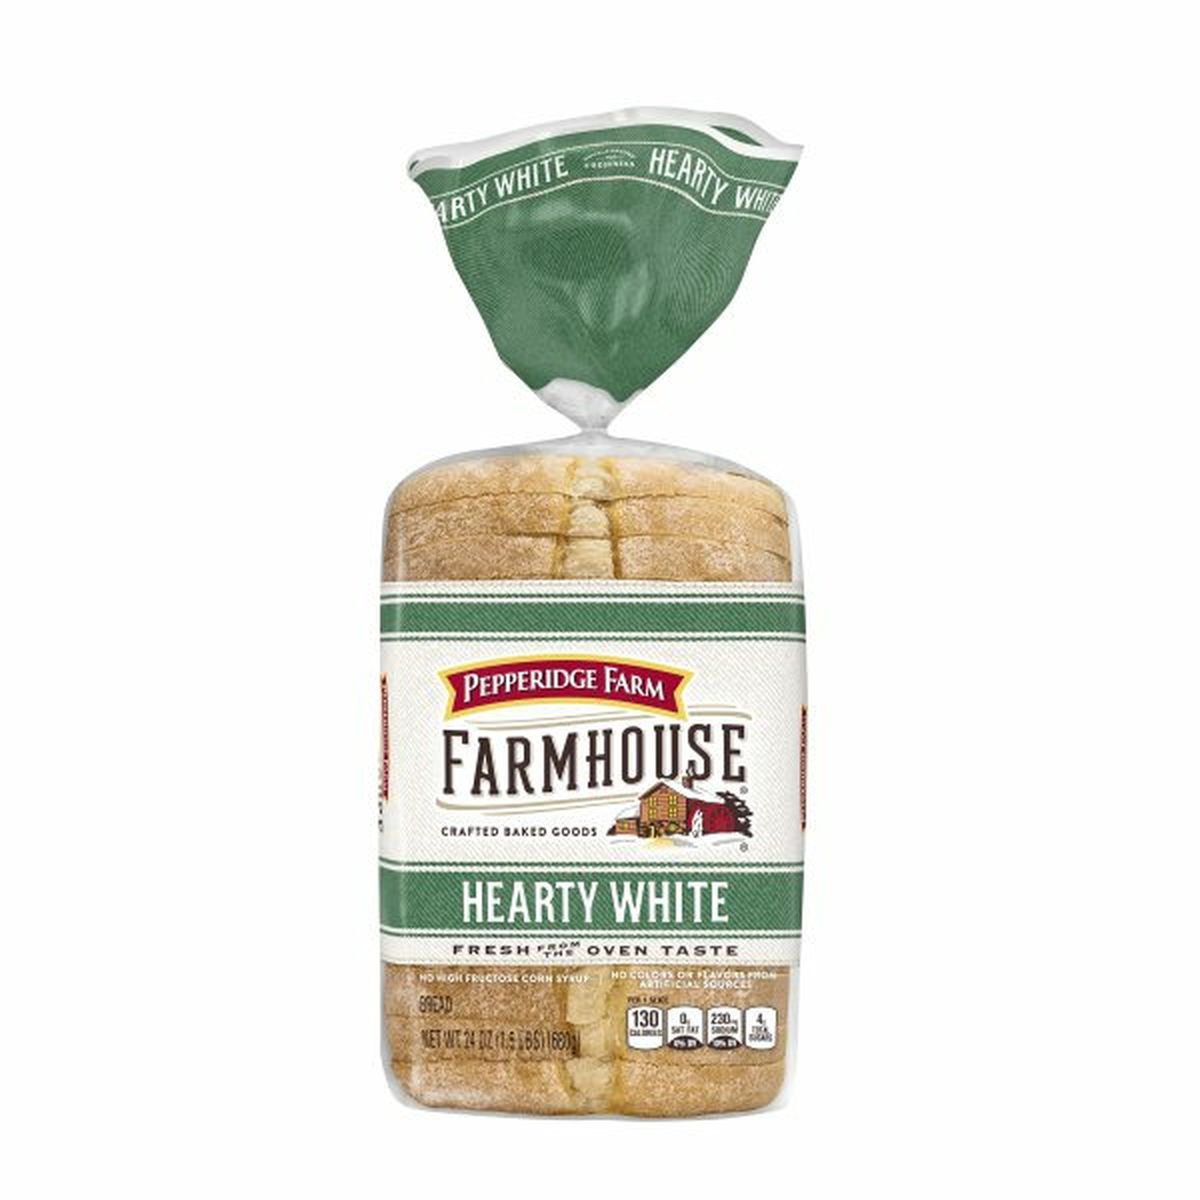 Calories in Pepperidge Farms  Farmhouse Farmhouse Hearty White Bread